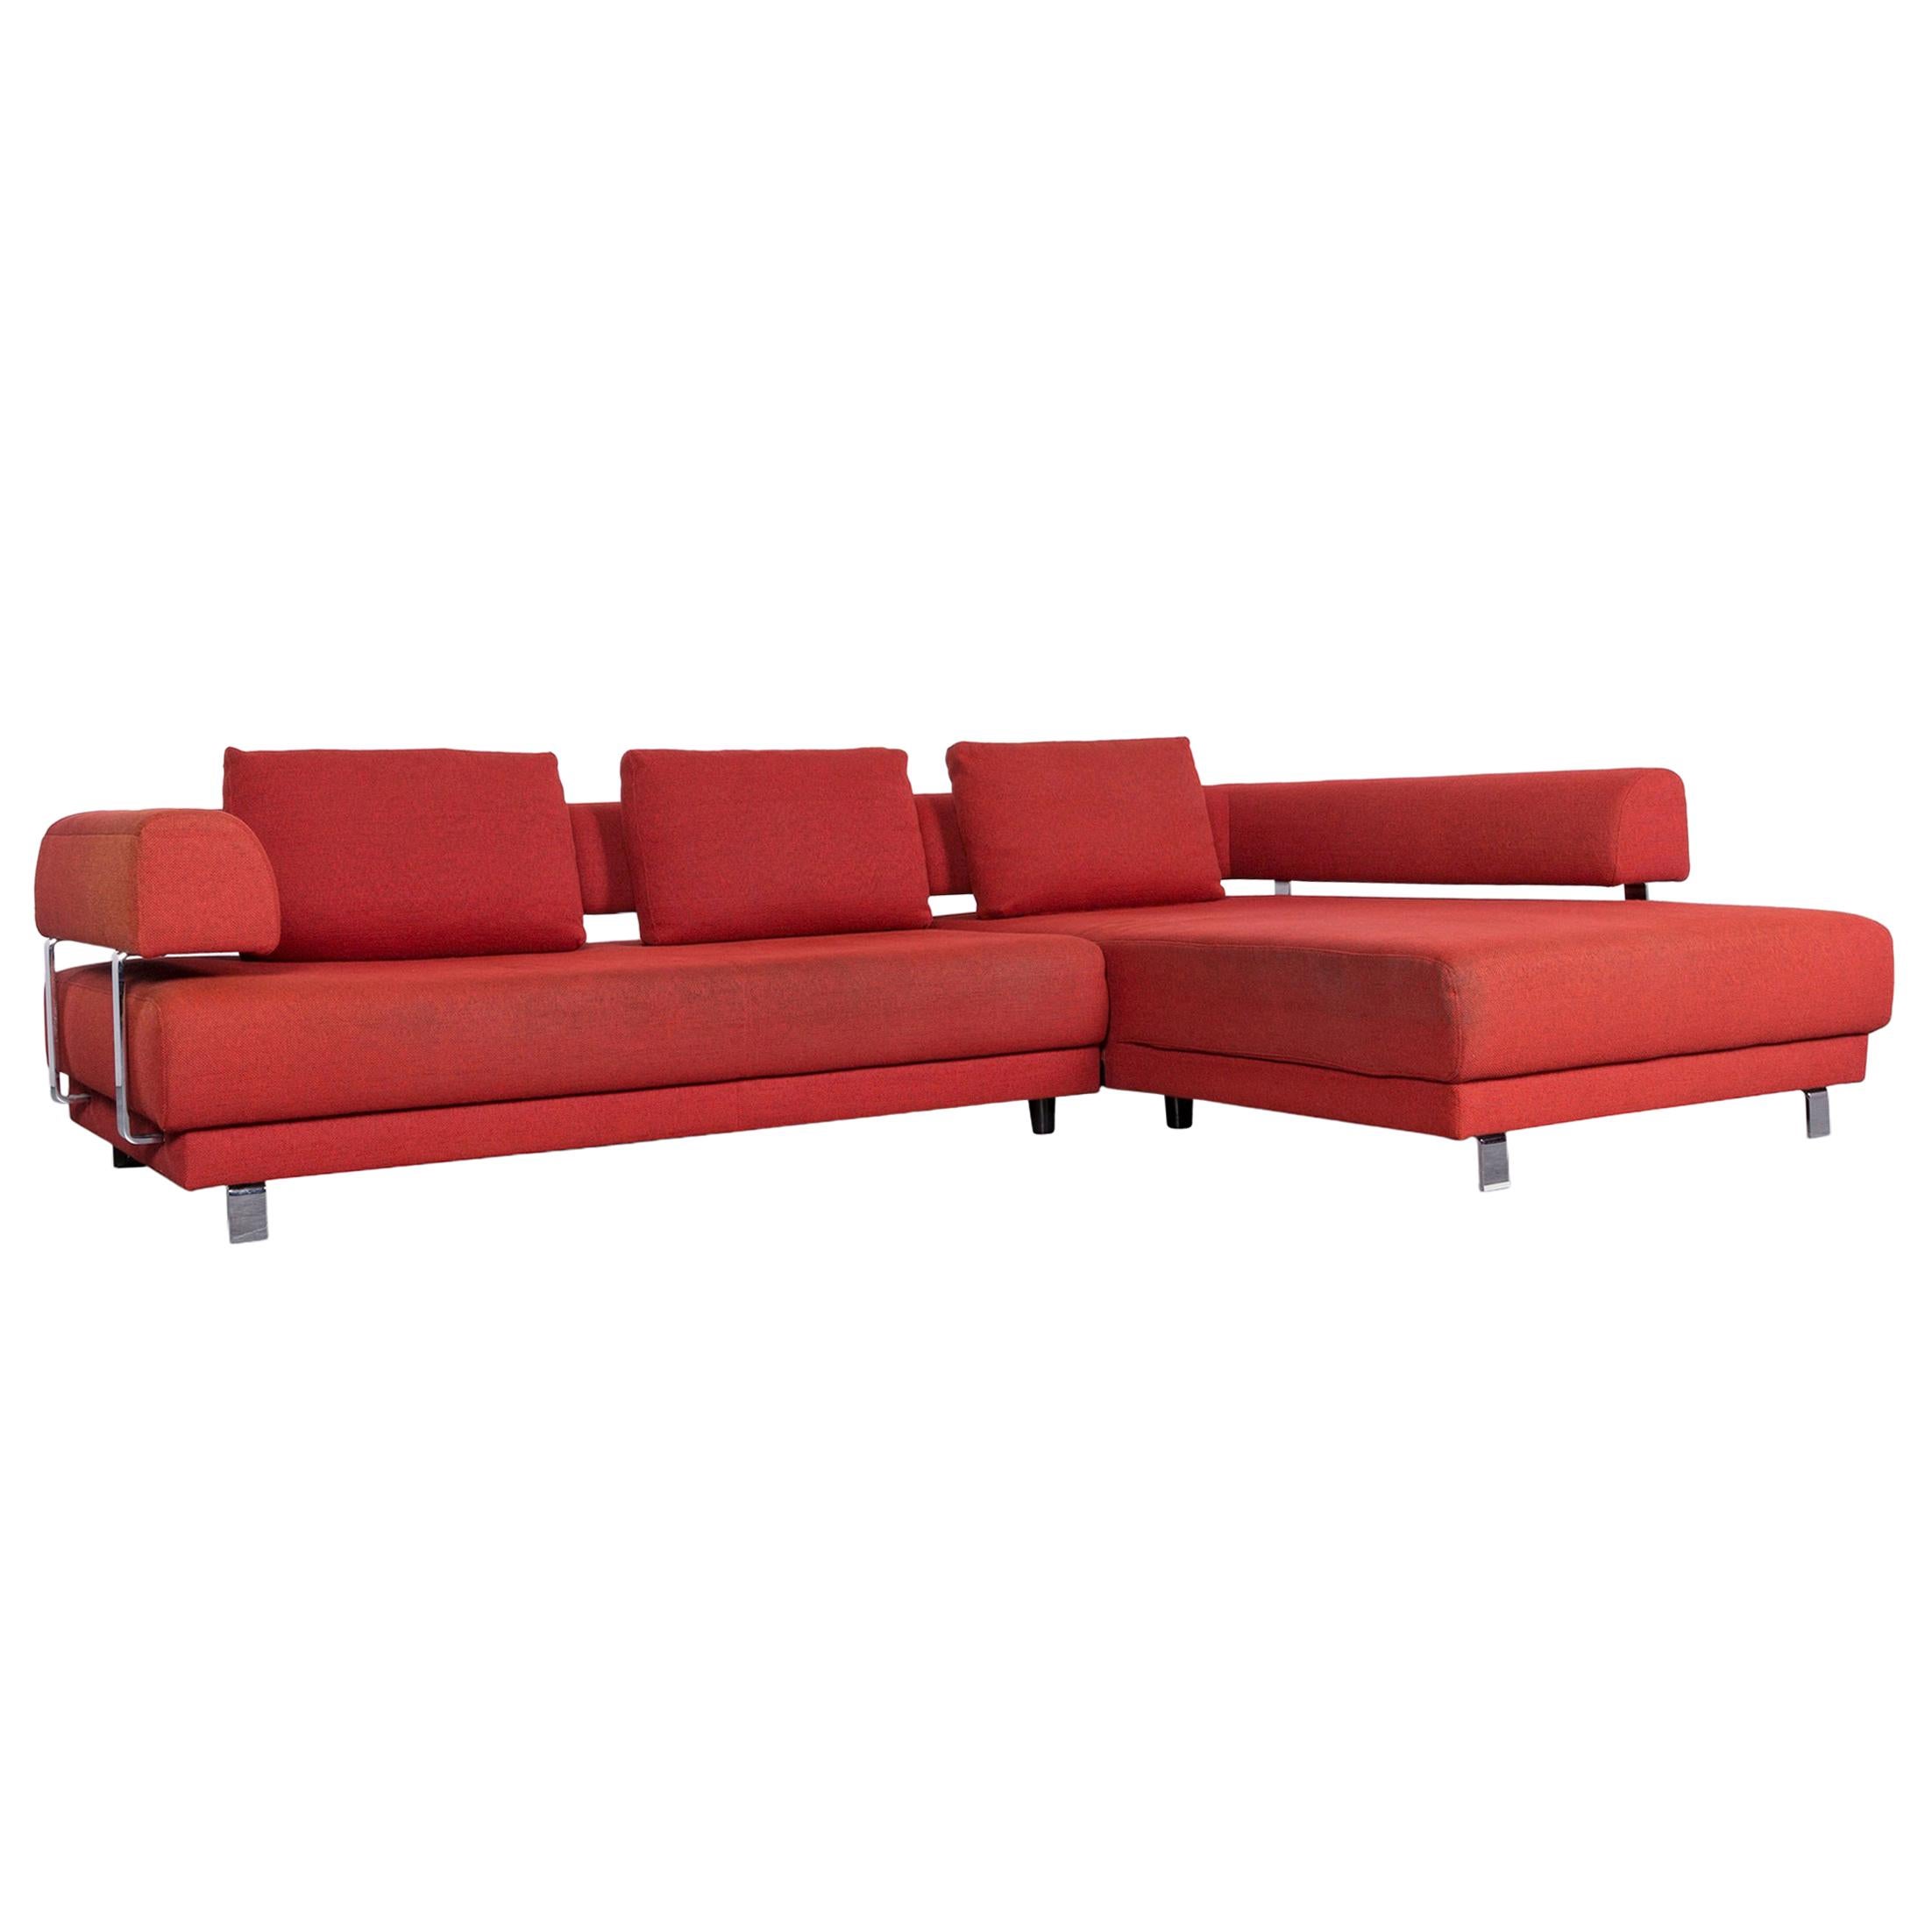 Ewald Schillig Brand Face Designer Sofa Fabric Red Corner Couch For Sale